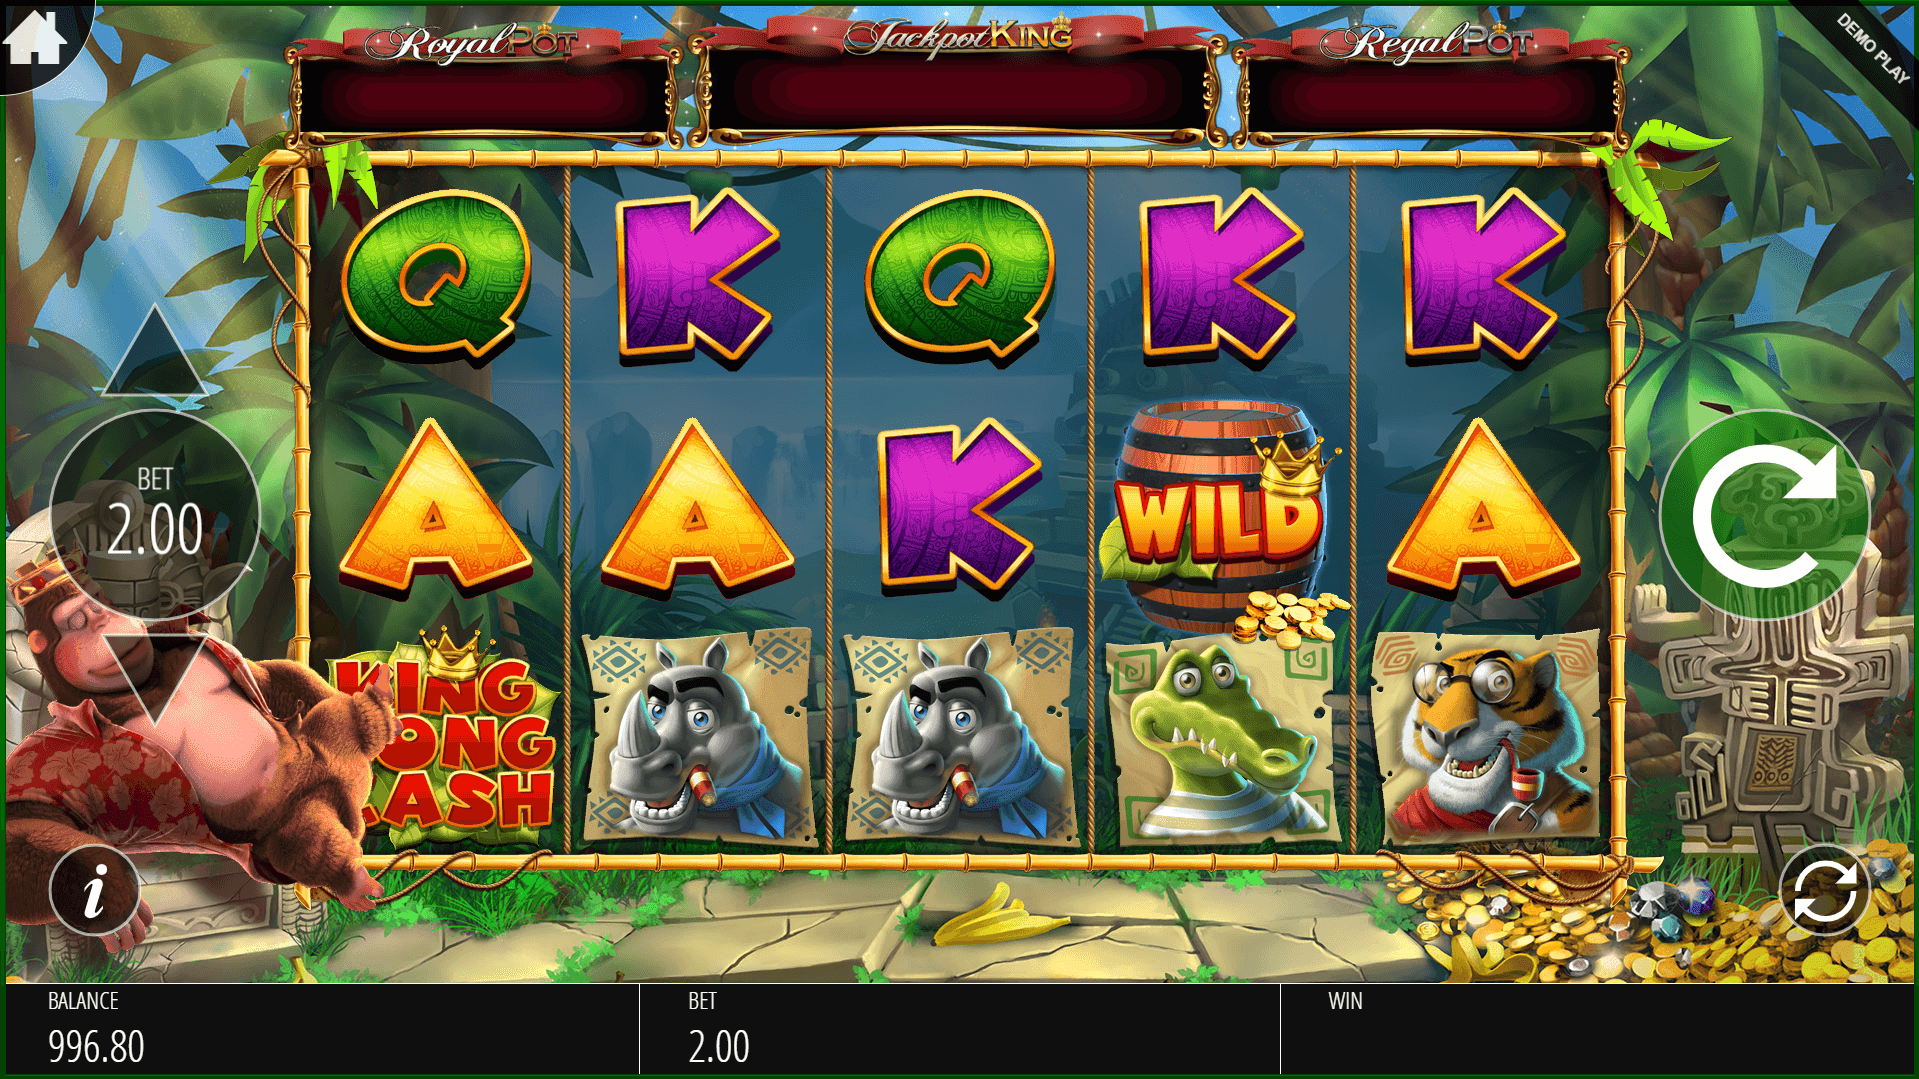 King Kong Cash Jackpot King slot play free